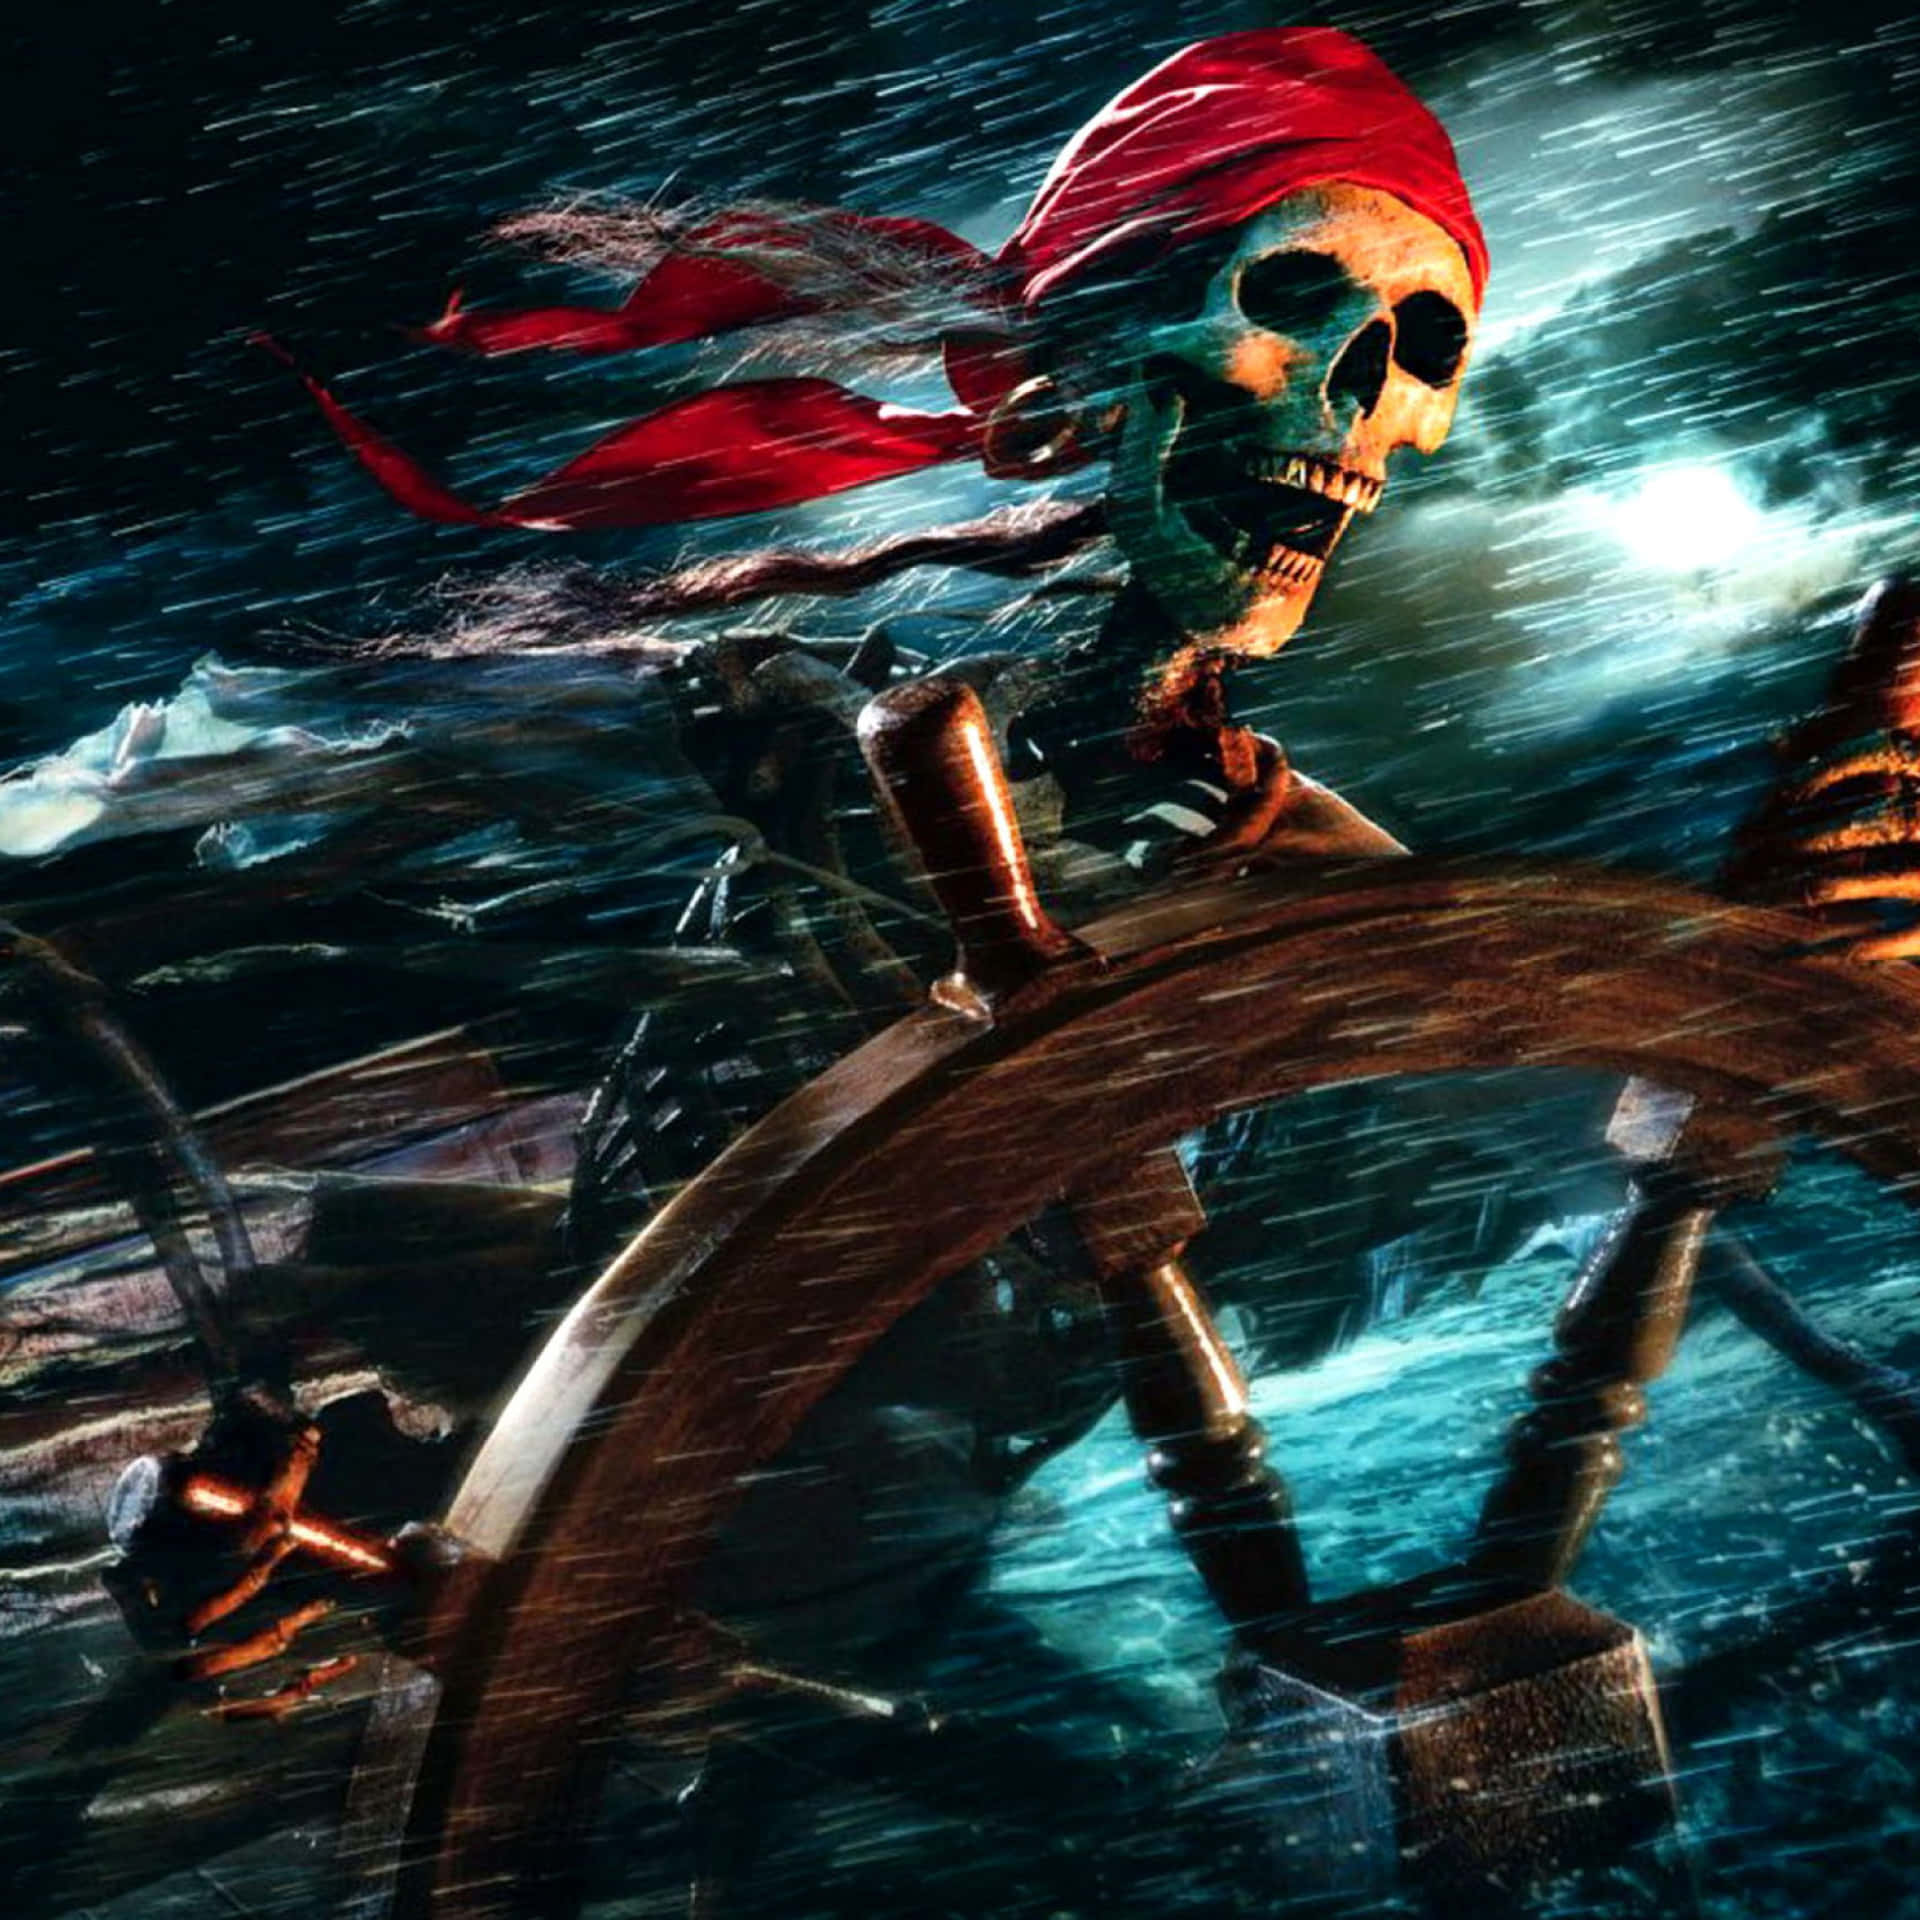 Captain Jack Sparrow on a daring adventure